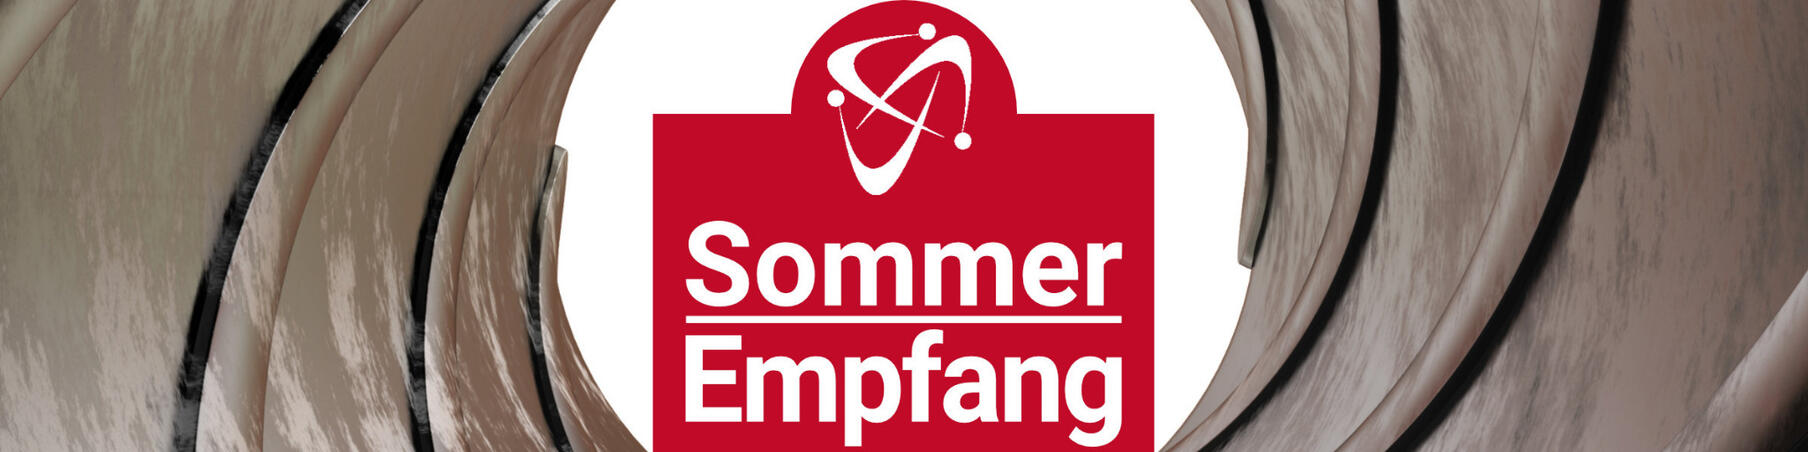 German Mittelstand Sommermempfang 2021